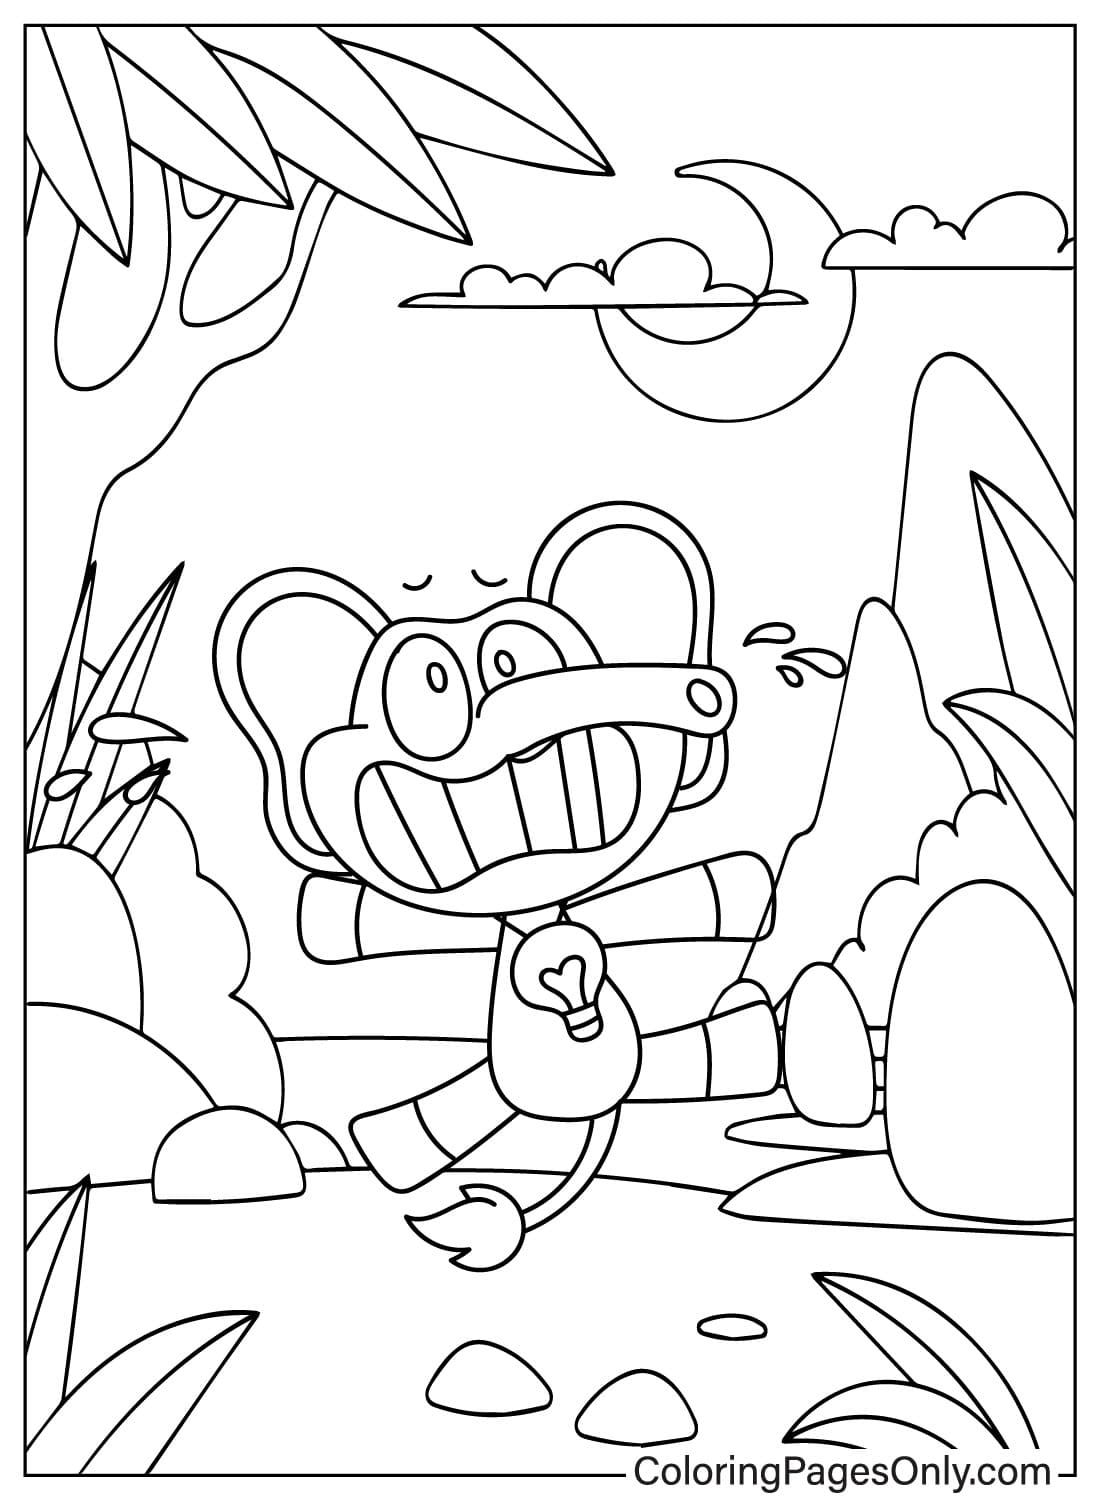 Página para colorir assustada de Bubba Bubbaphant de Bubba Bubbaphant